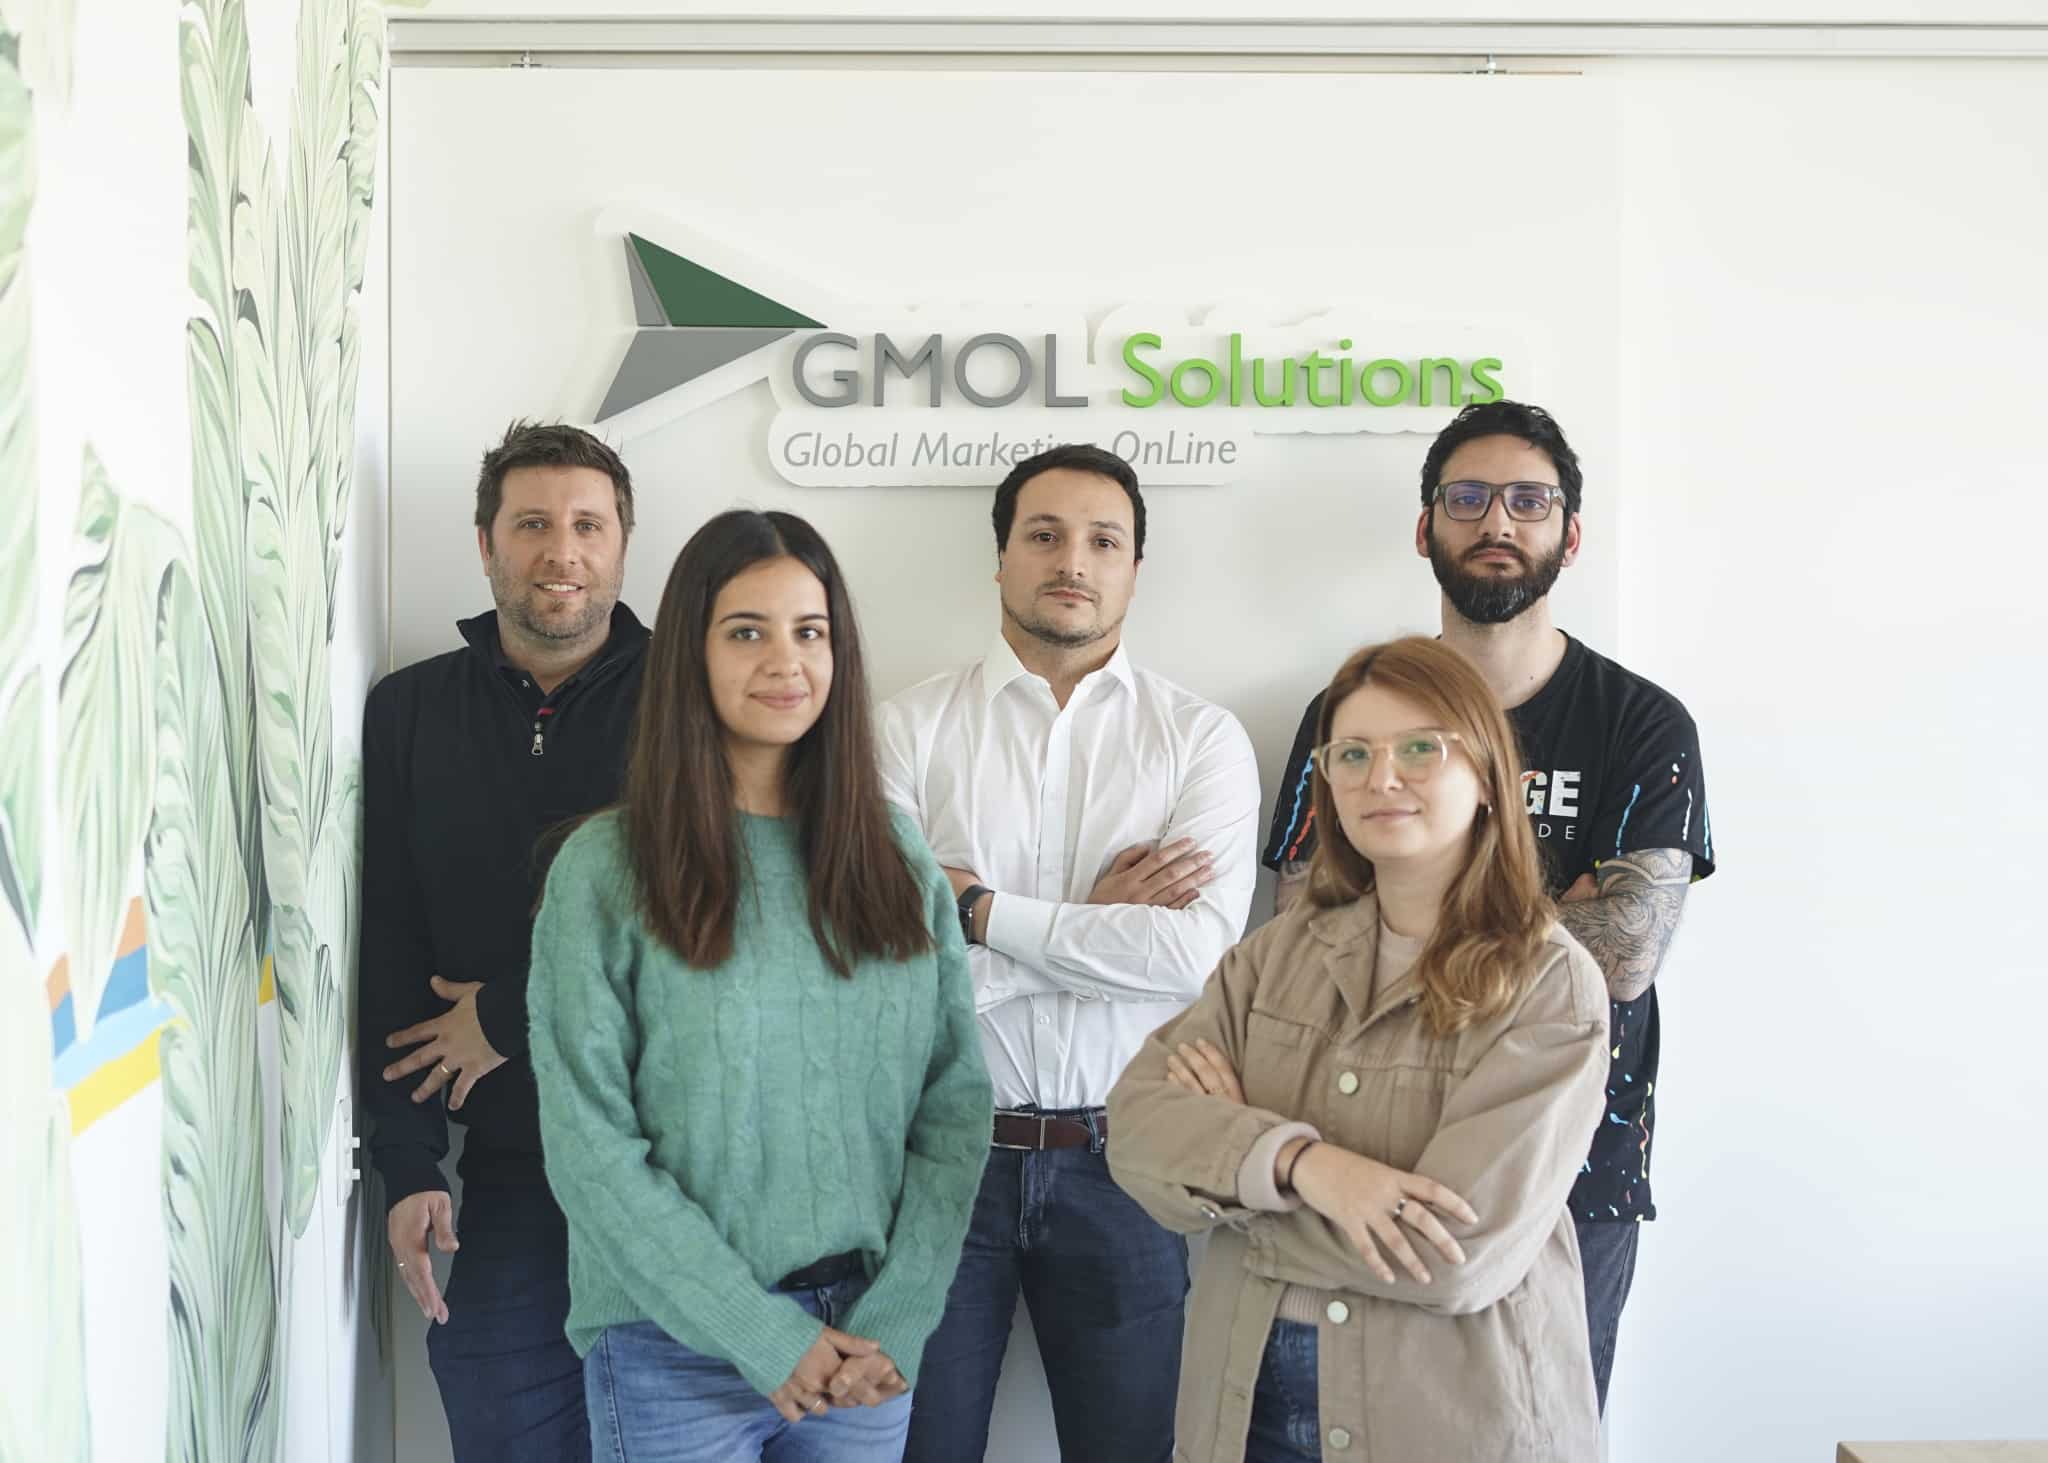 GMOL Solutions marketing digital